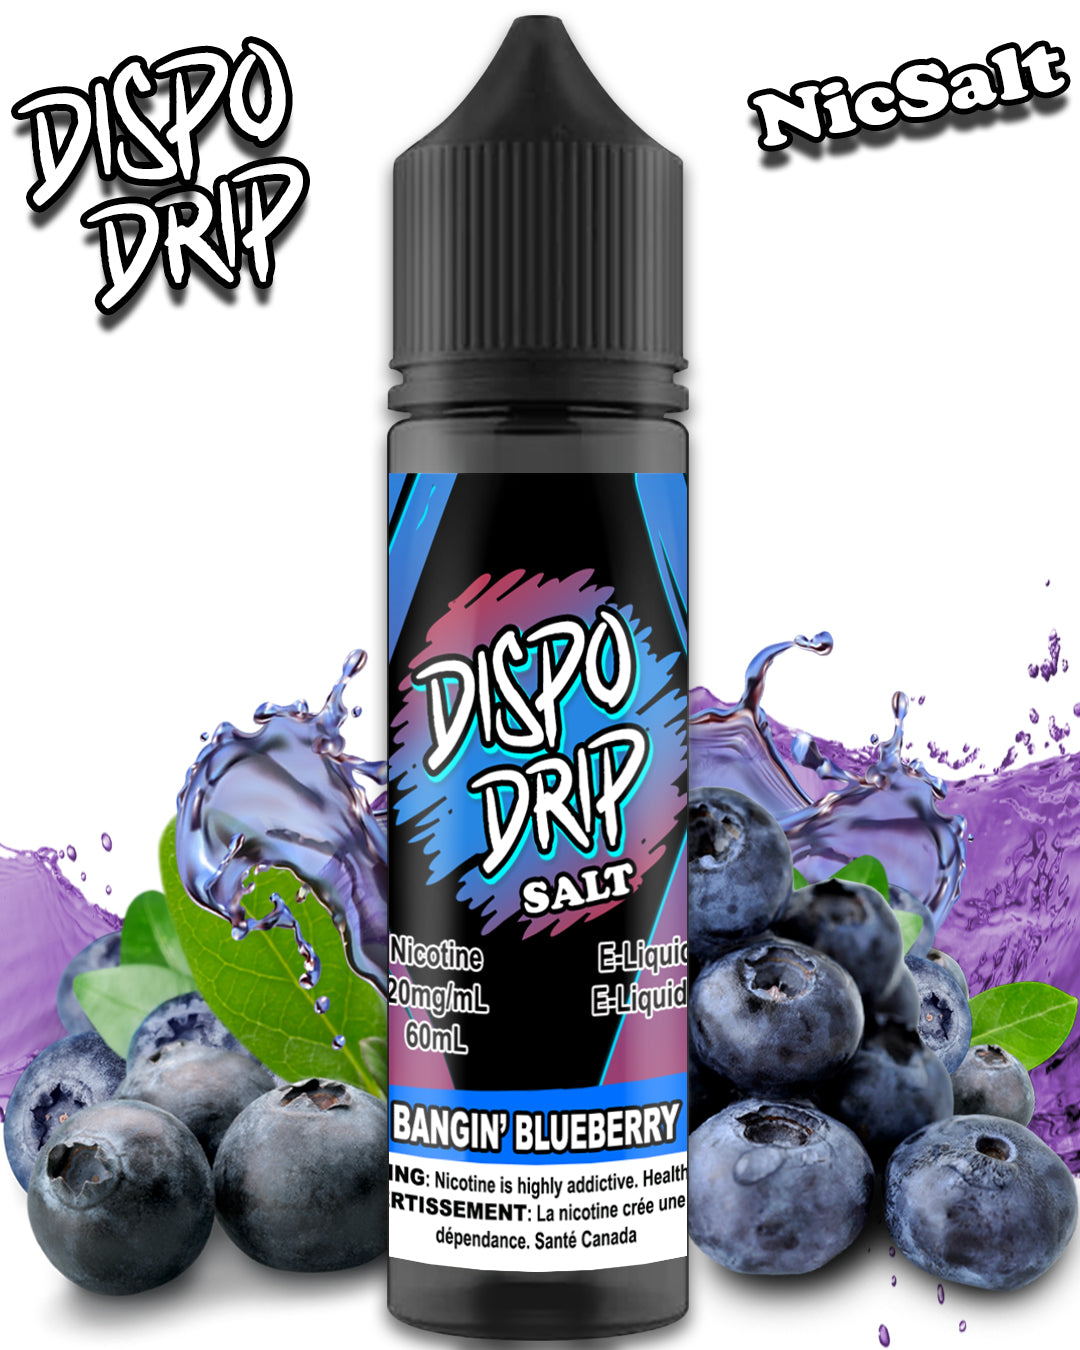 DISPO DRIP - BANGIN' BLUEBERRY SALT